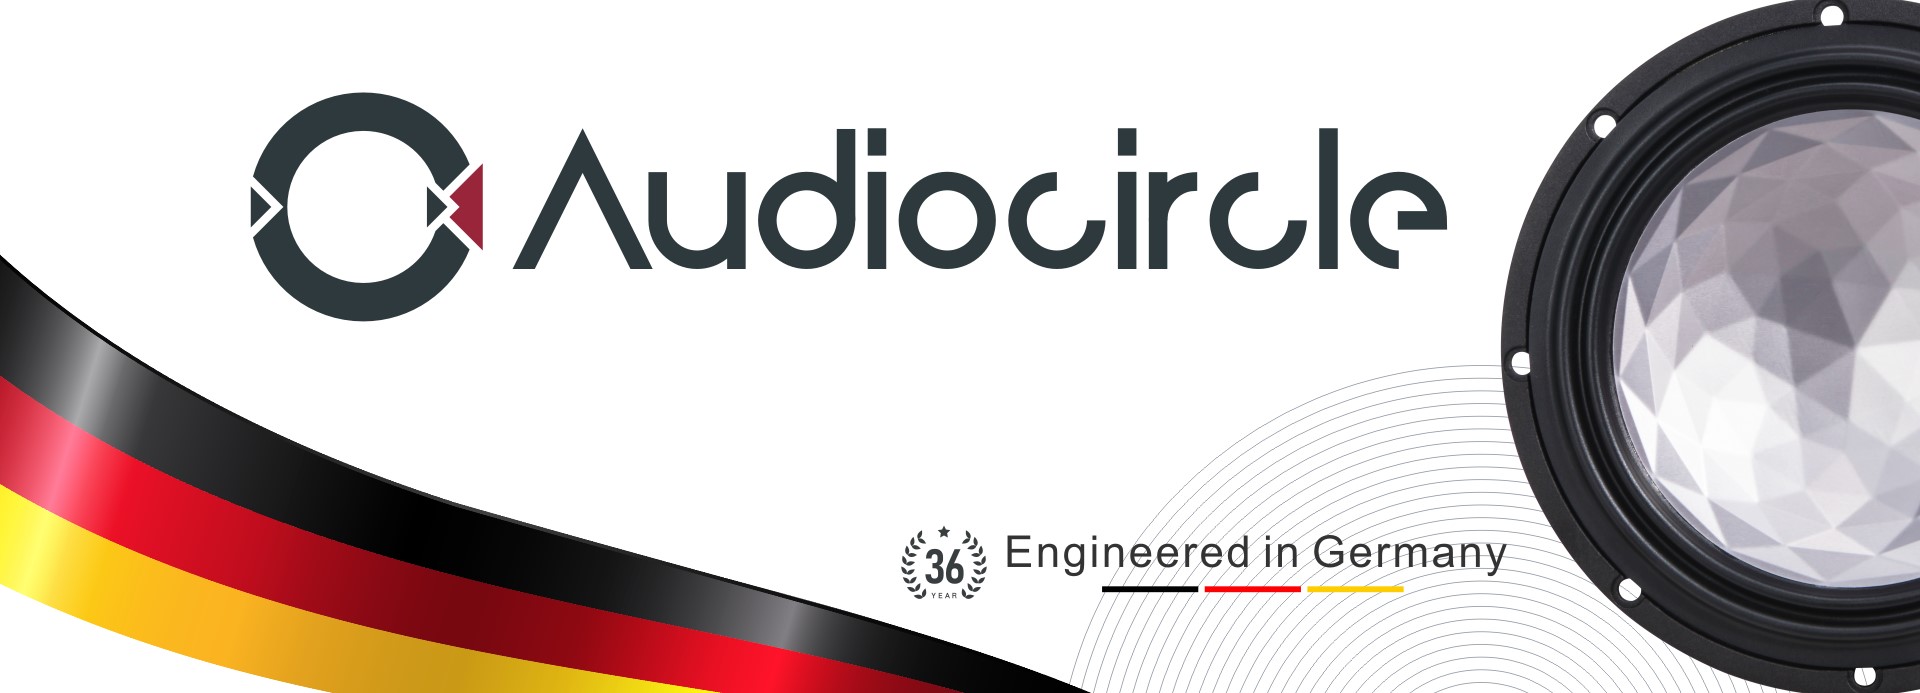 Audiocircle-banner